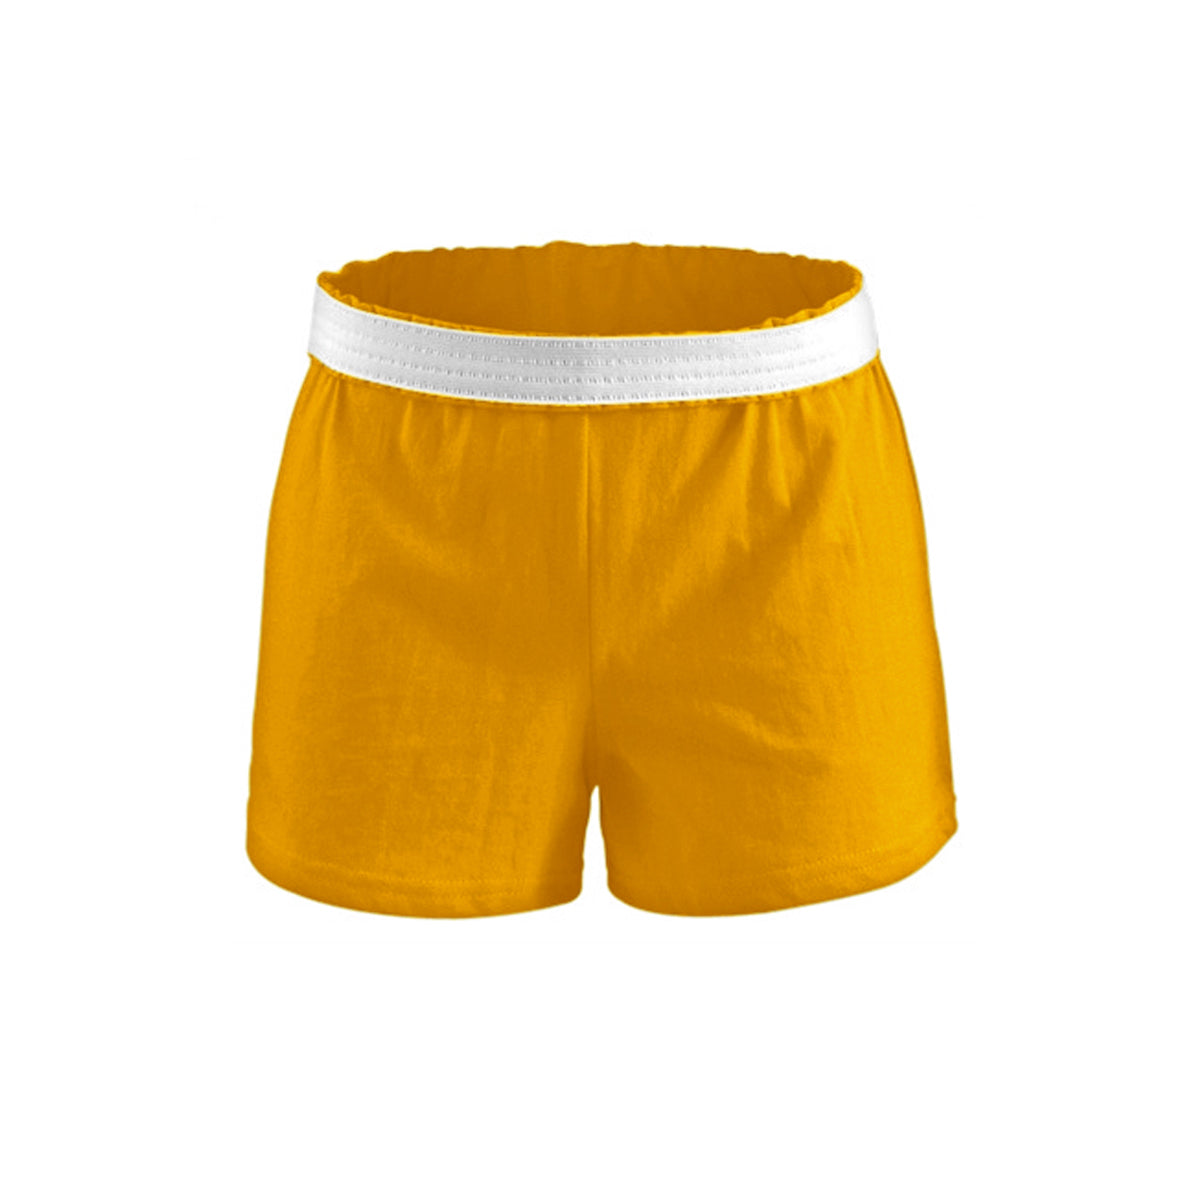 Sussex Middle Design 3 Shorts